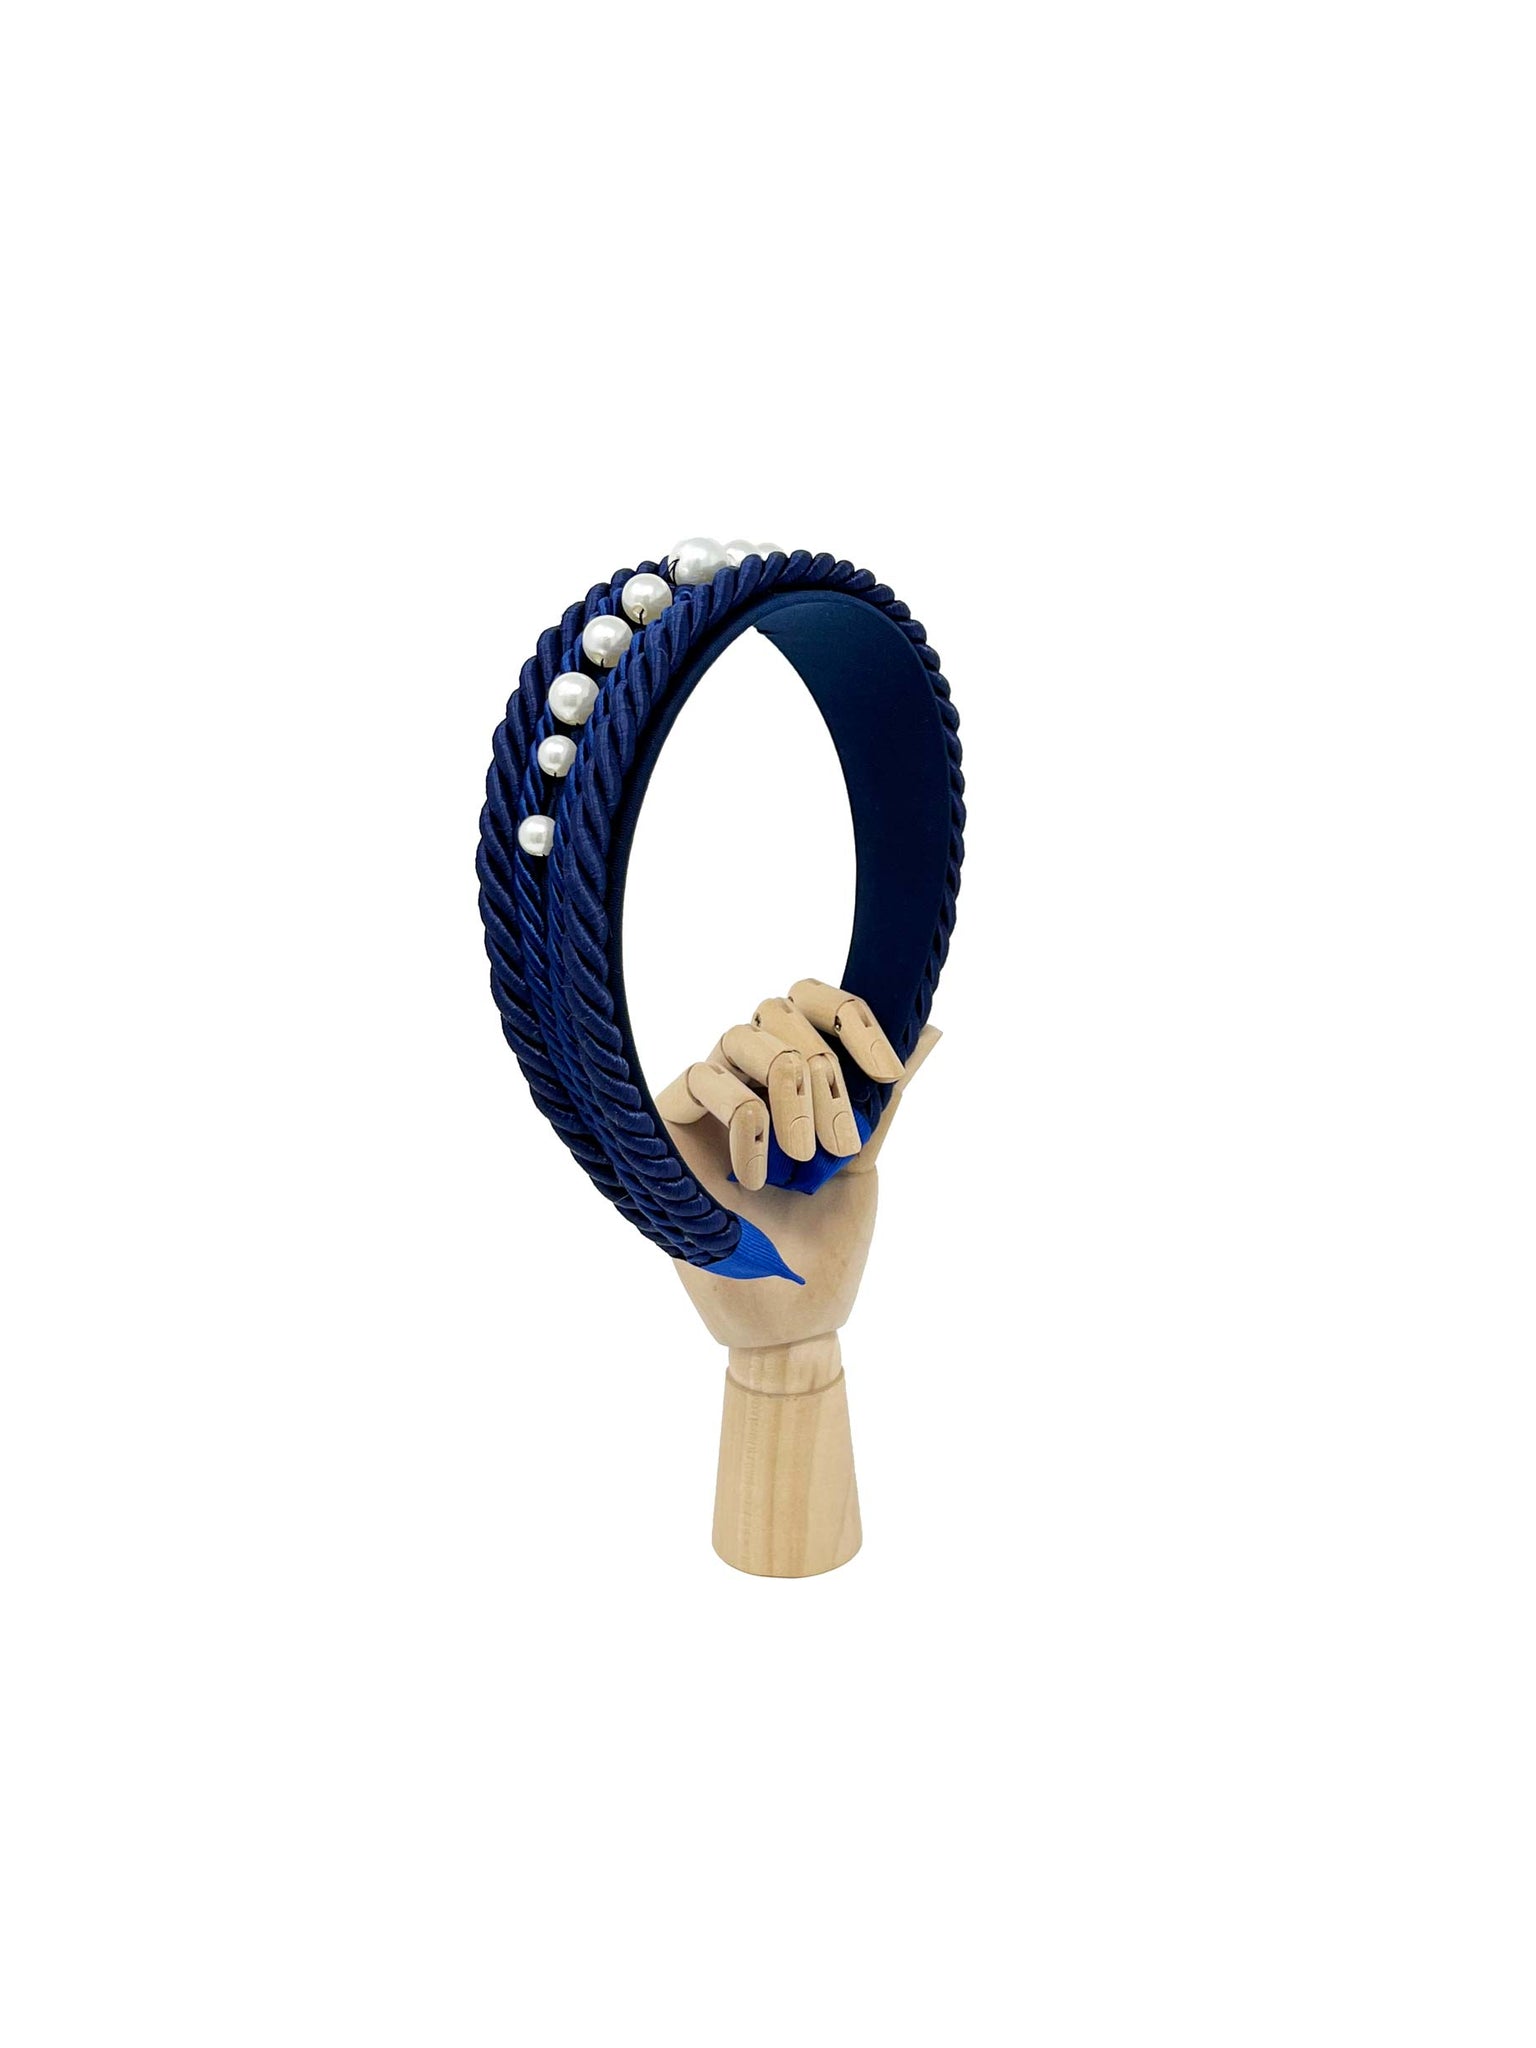 Midnight blue lanyard headband with pearls